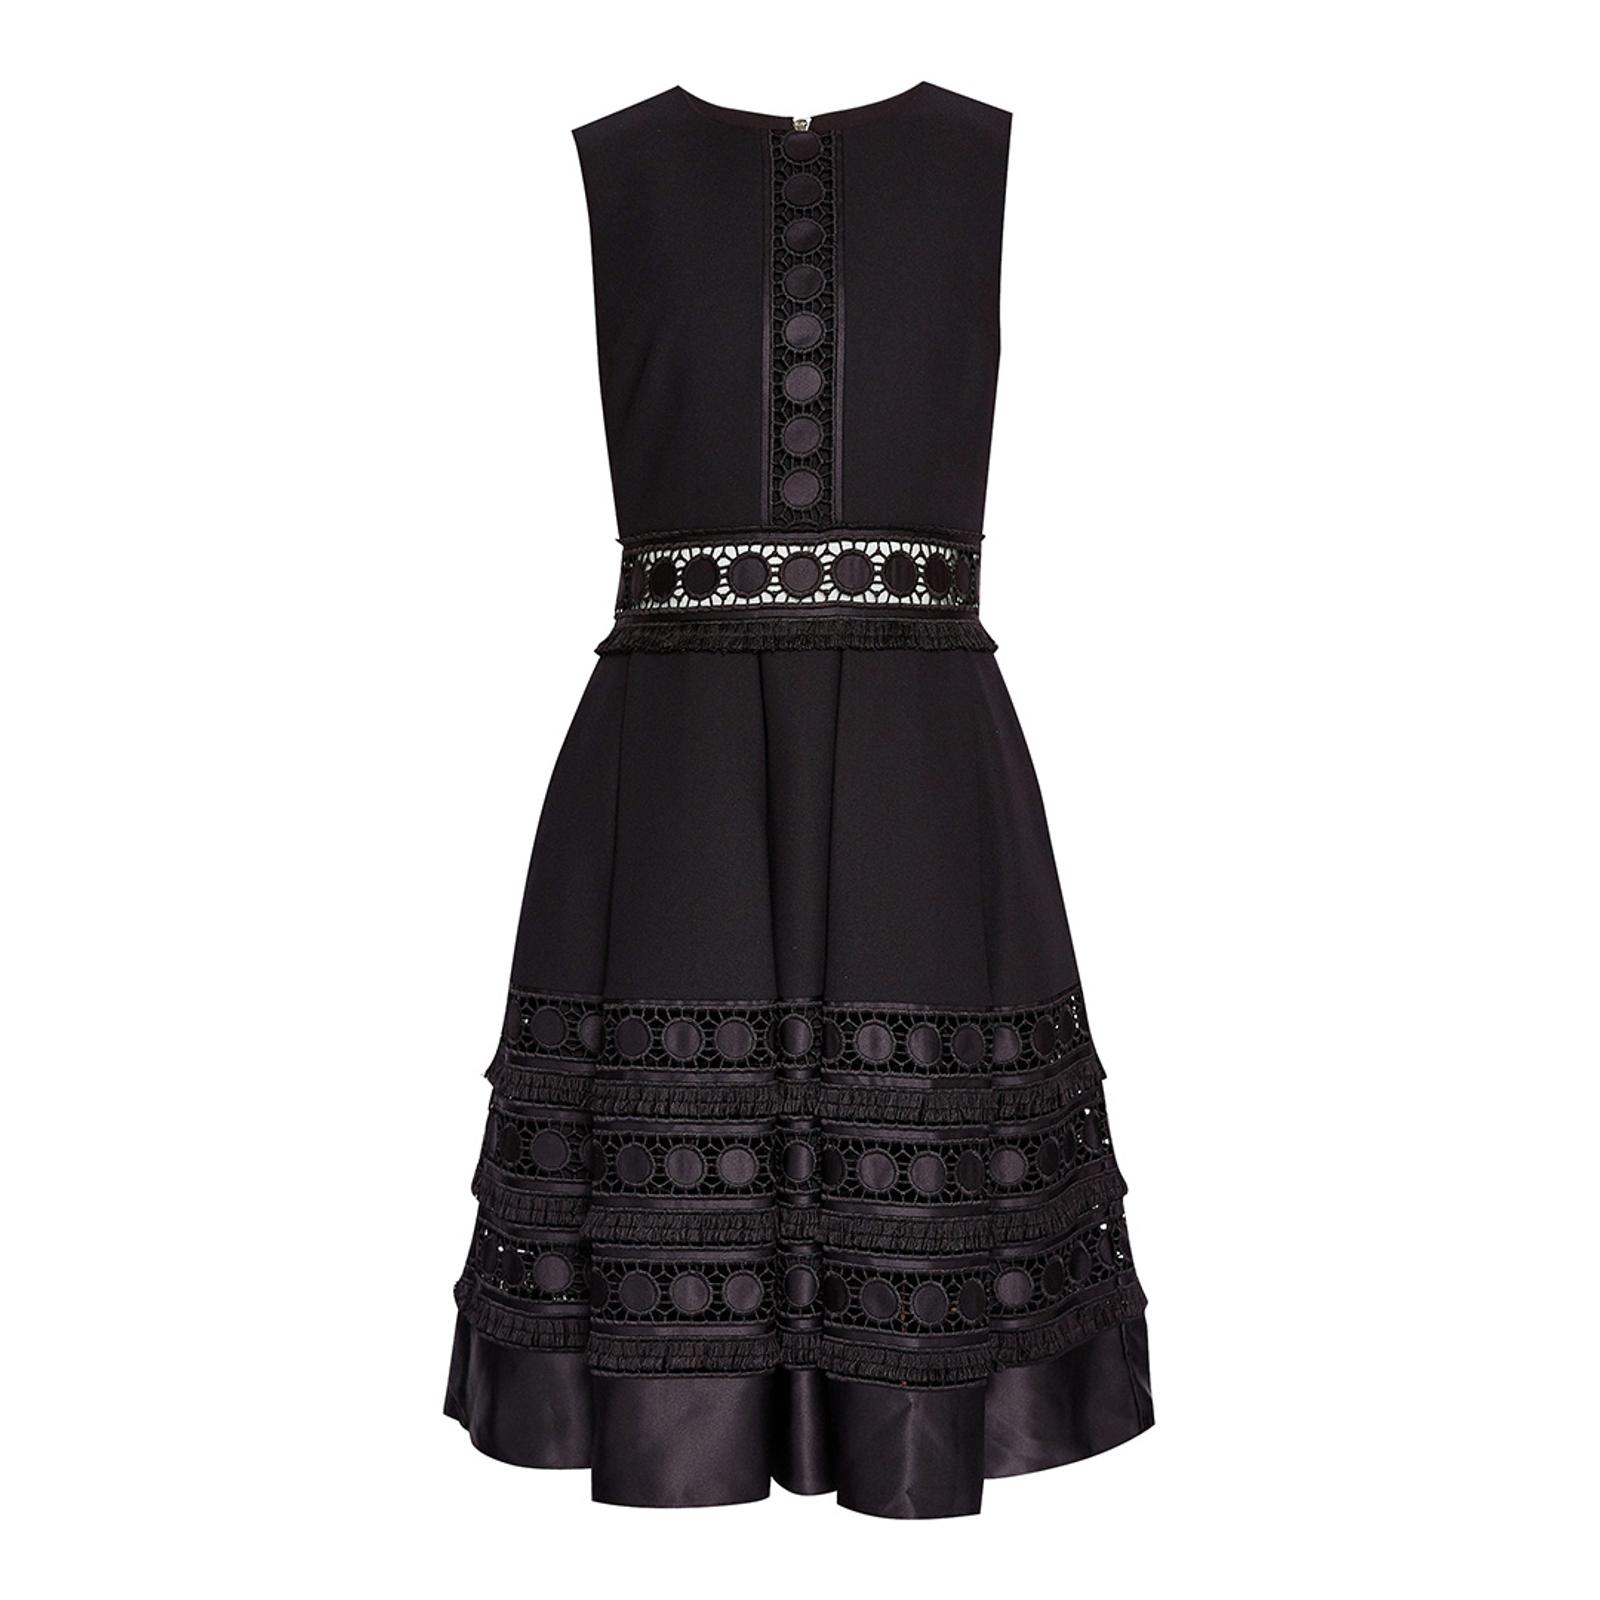 Black Olym Contrast Paneling Dress - BrandAlley